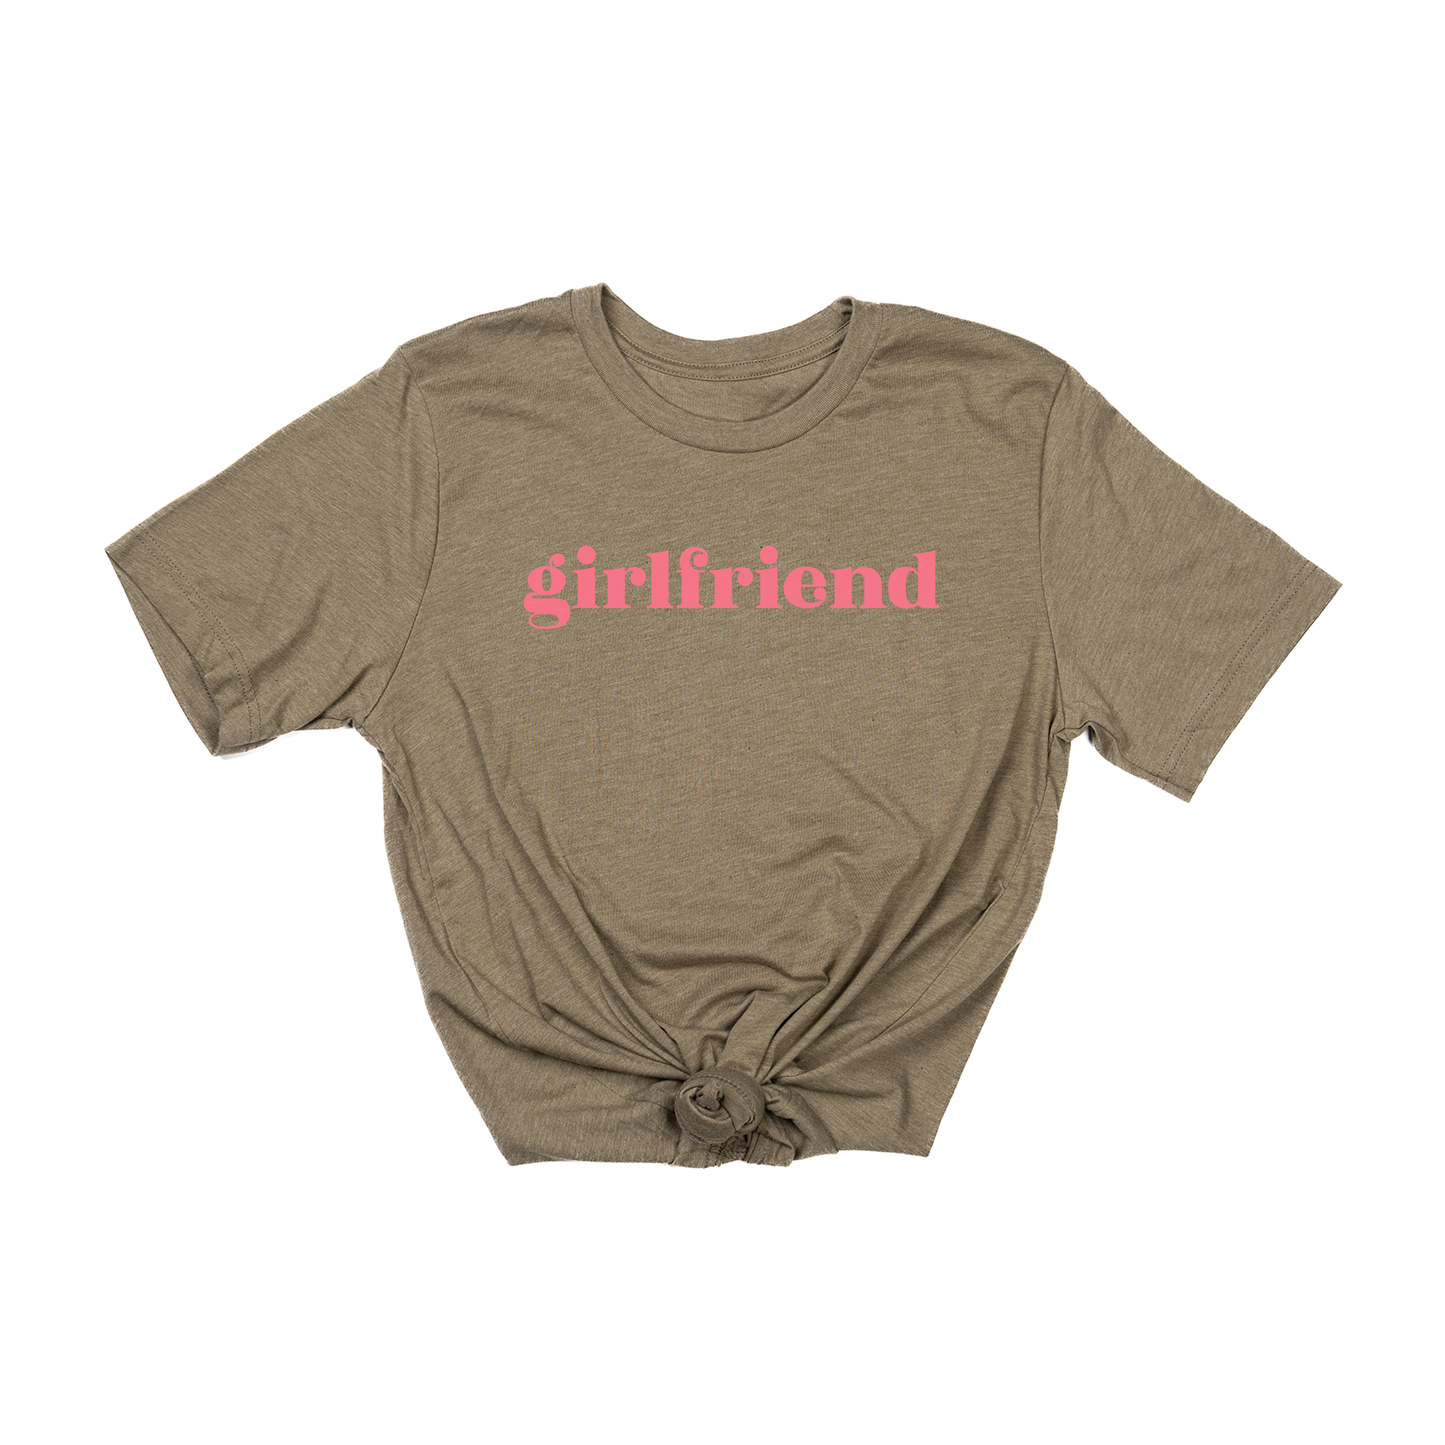 Girlfriend - Tee (Olive)